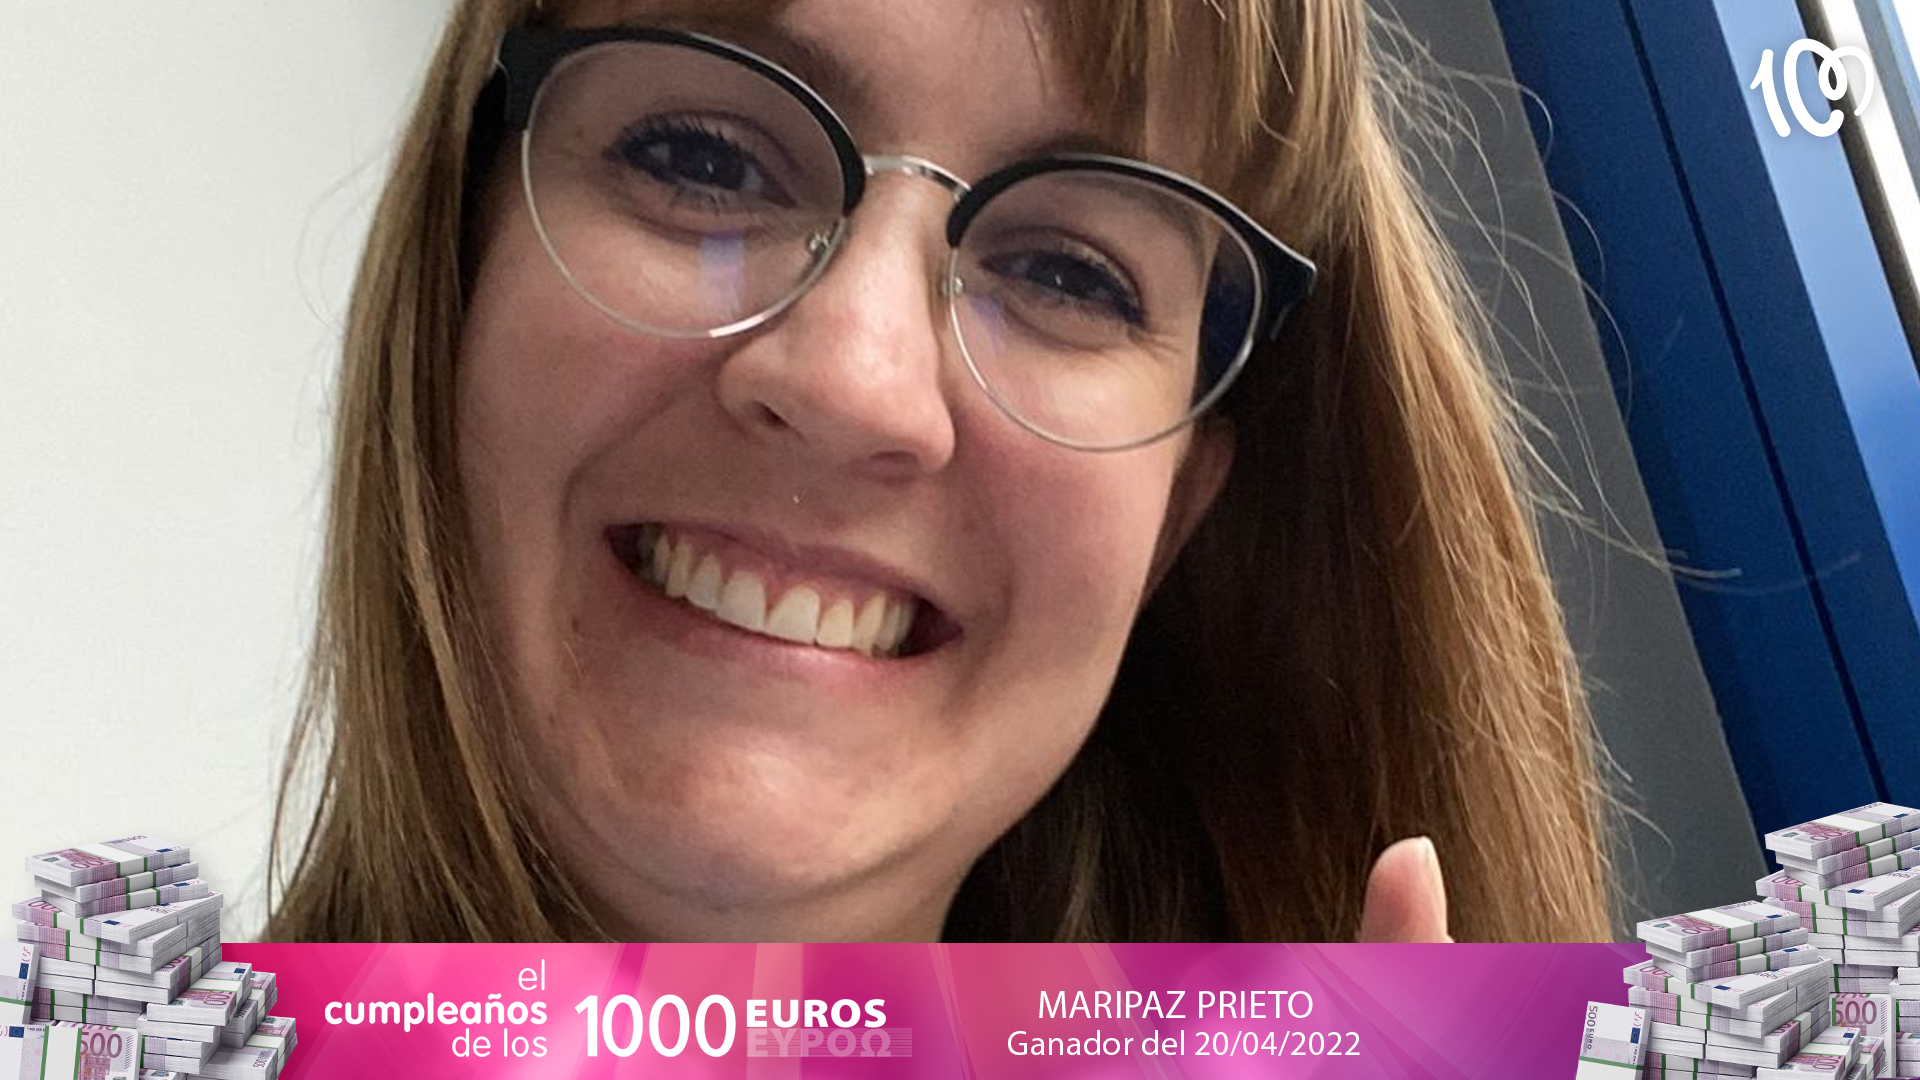 Mari Paz gana 1.000 euros en CADENA 100: "No sabía si era verdad o no"